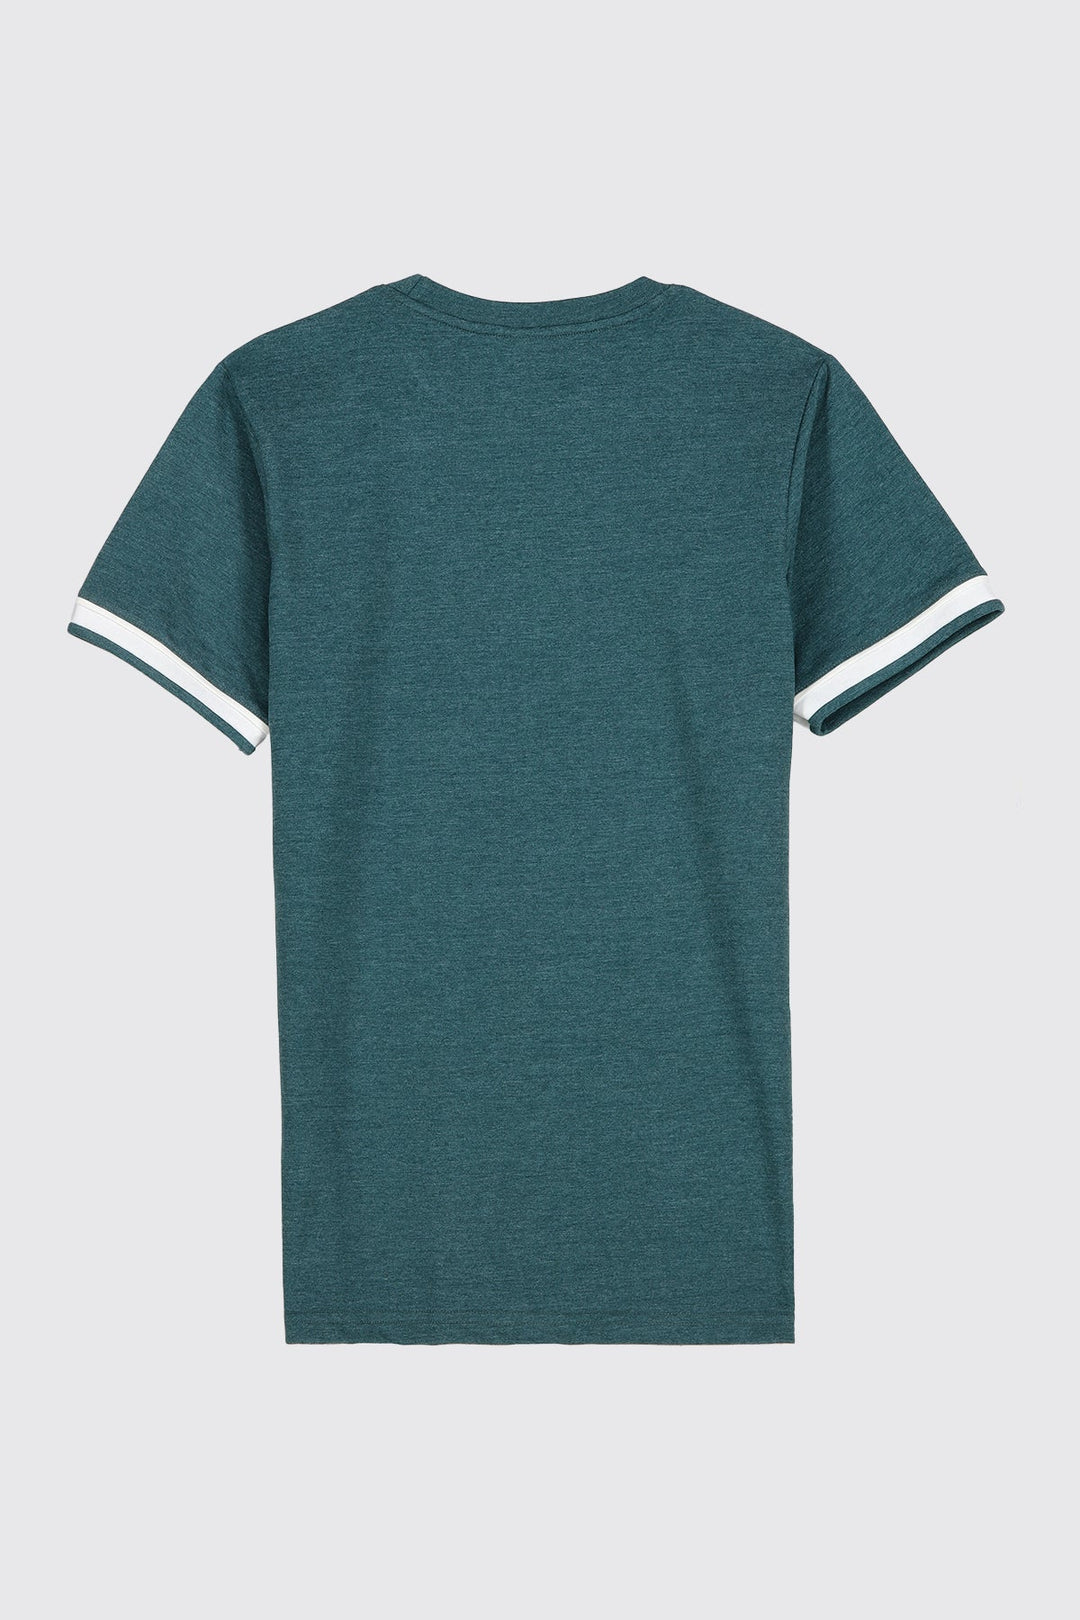 Daring Teal Melange T-Shirt - A23 - MT0299R